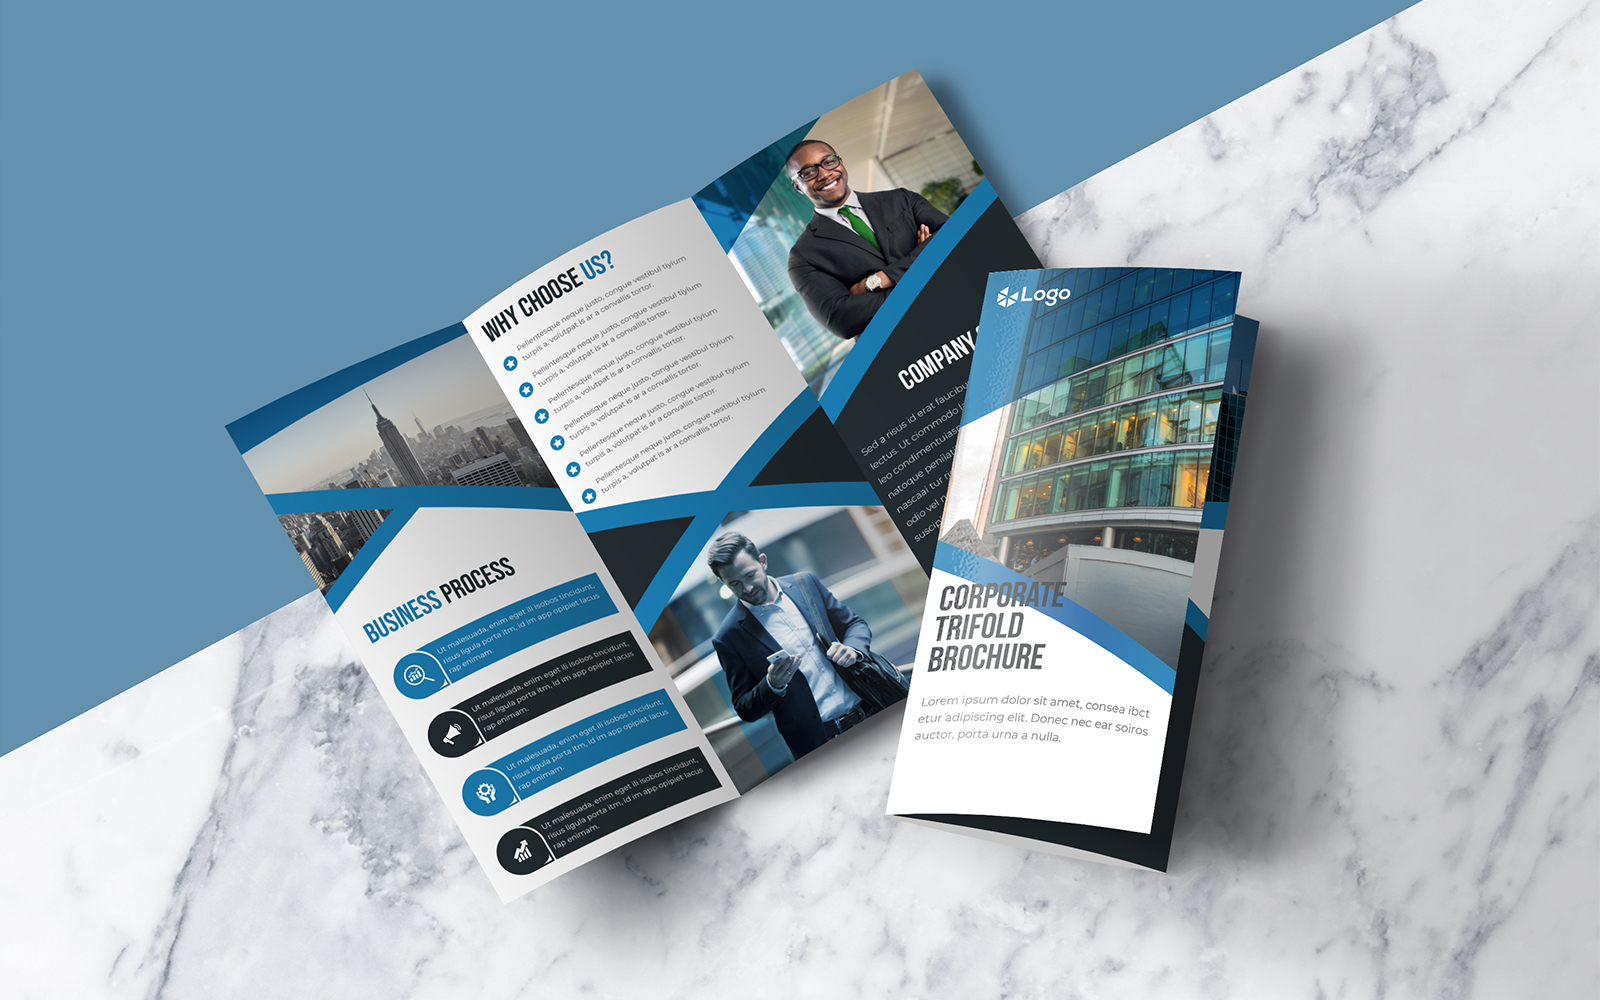 Blue Trifold Brochure Design - Corporate Identity Template